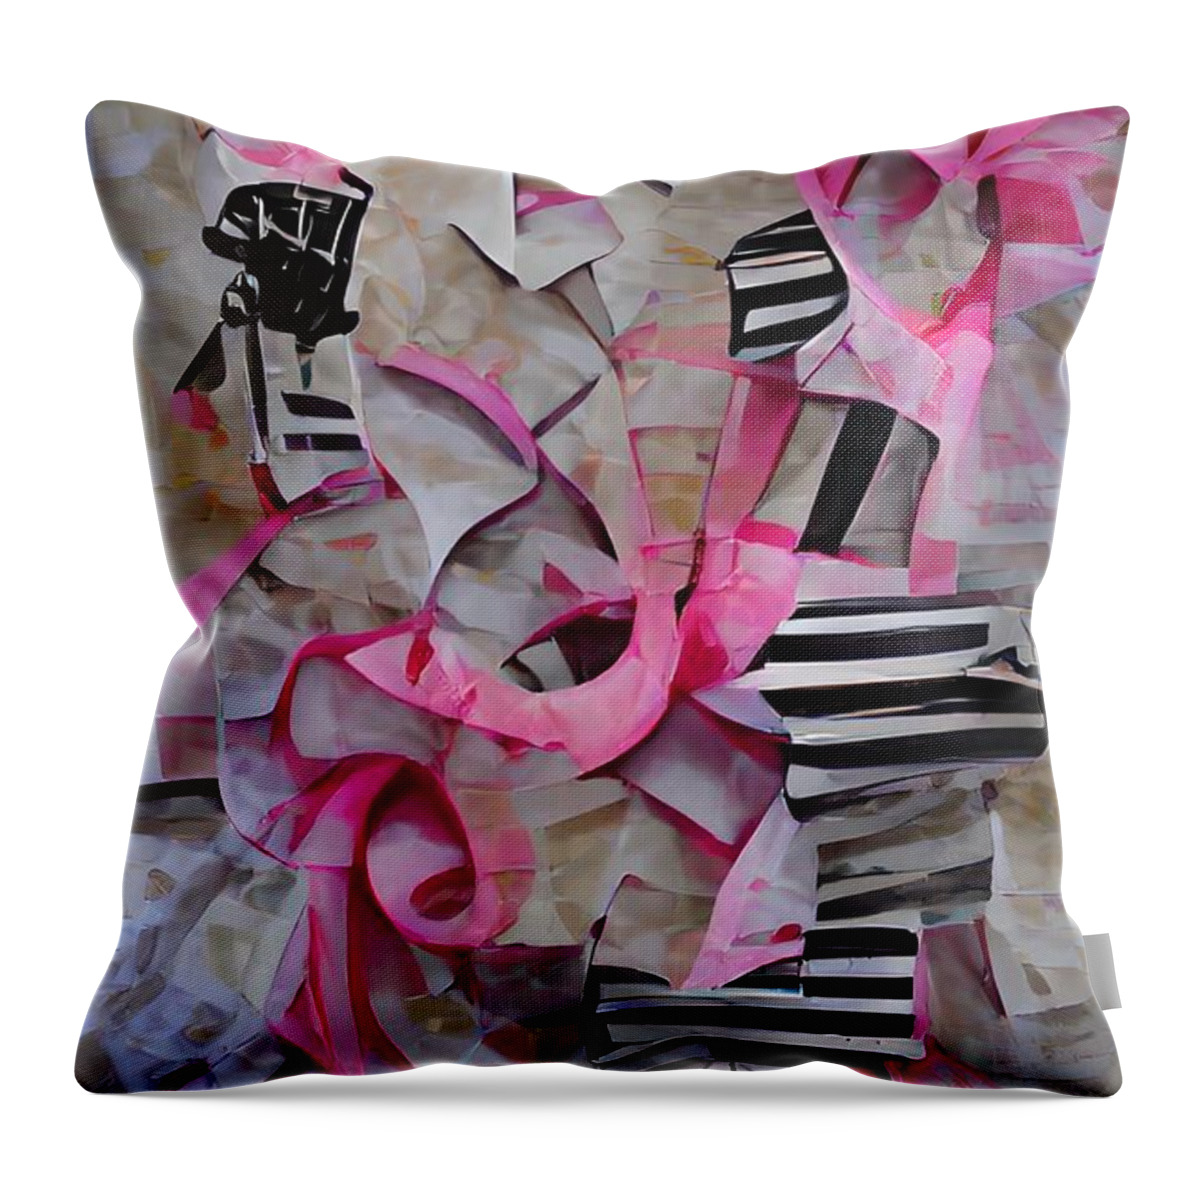 Ai-art Throw Pillow featuring the digital art Torn Paper No1 by Bonnie Bruno